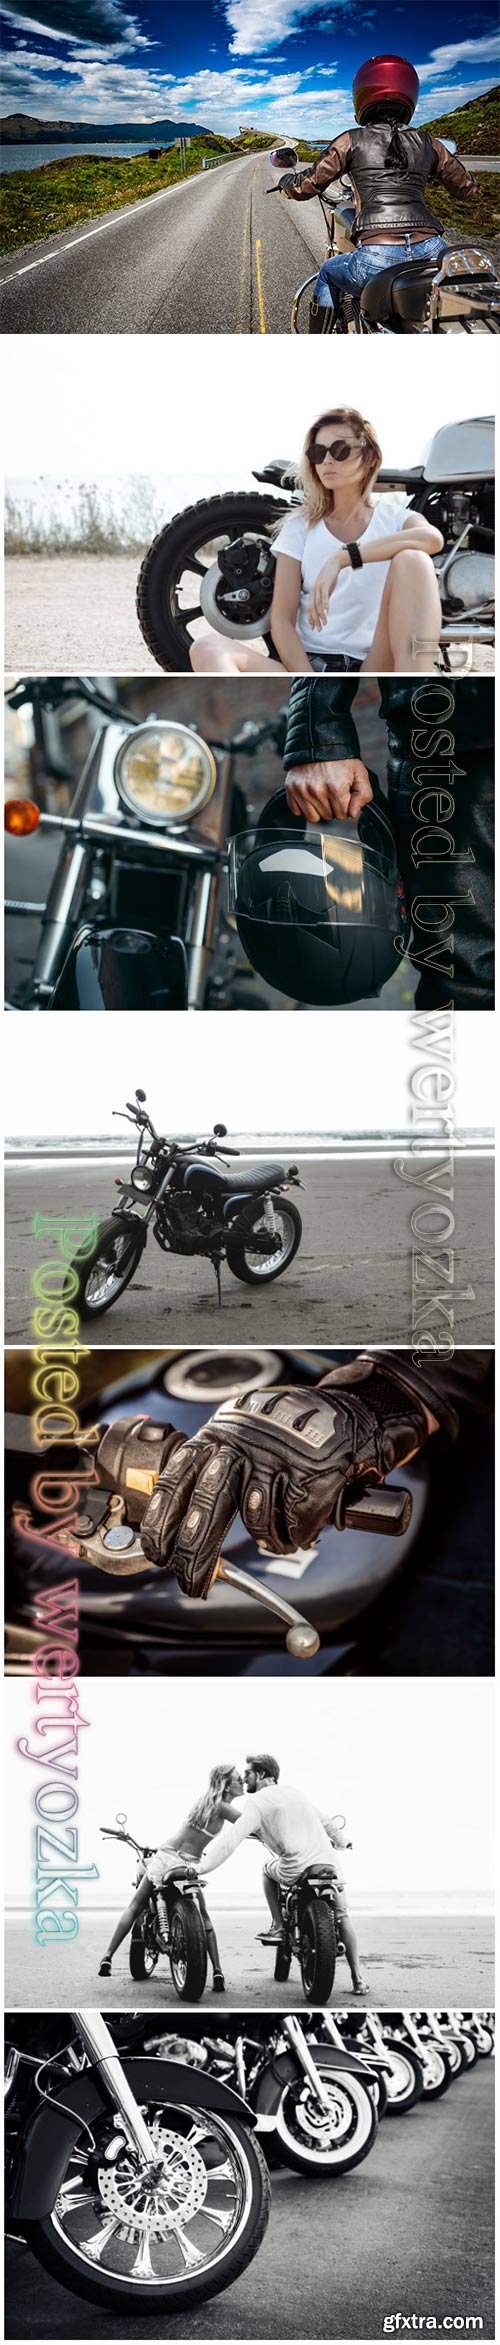 Motorcycles, biker beautiful stock photo